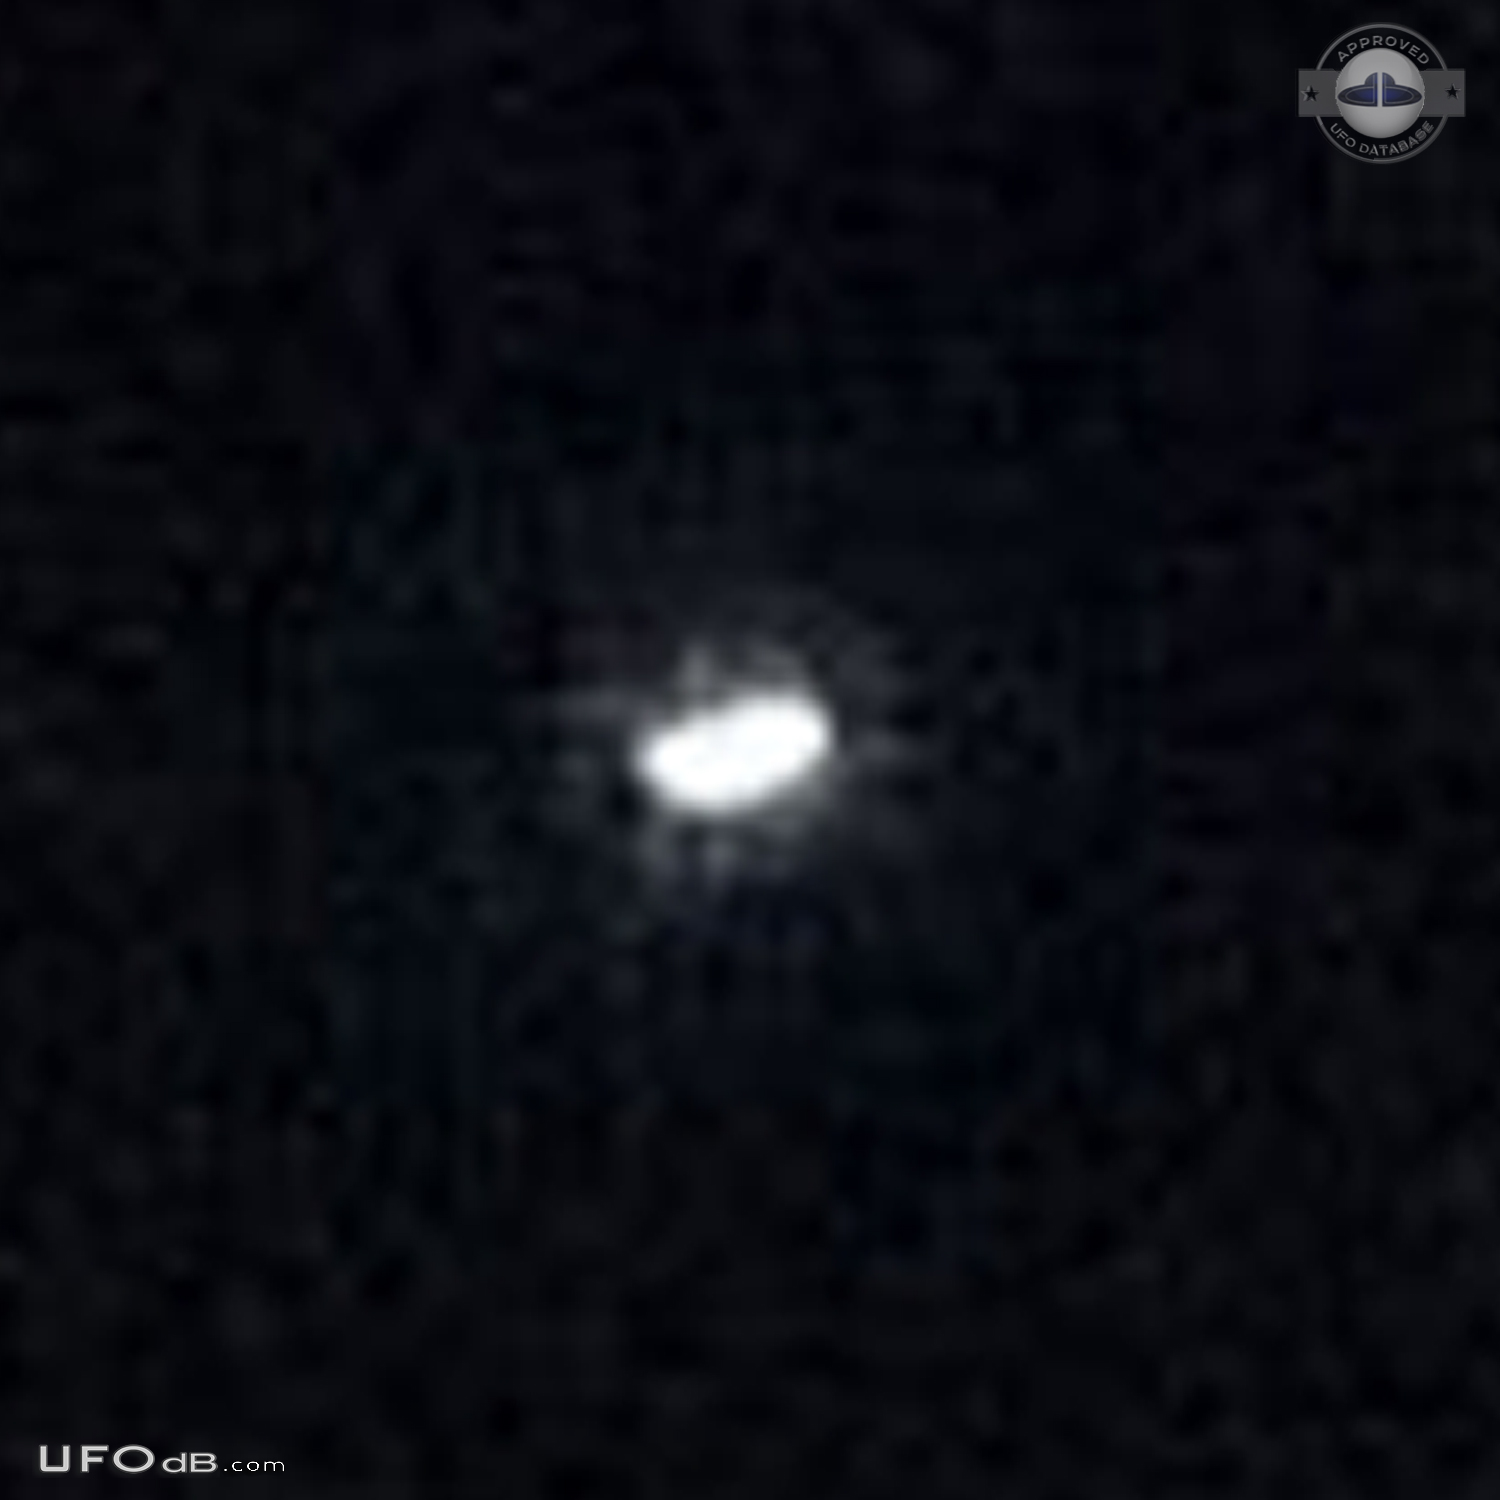 UFO glowing like a star,but too big - Glasgow Scotland 2015 UFO Picture #728-4